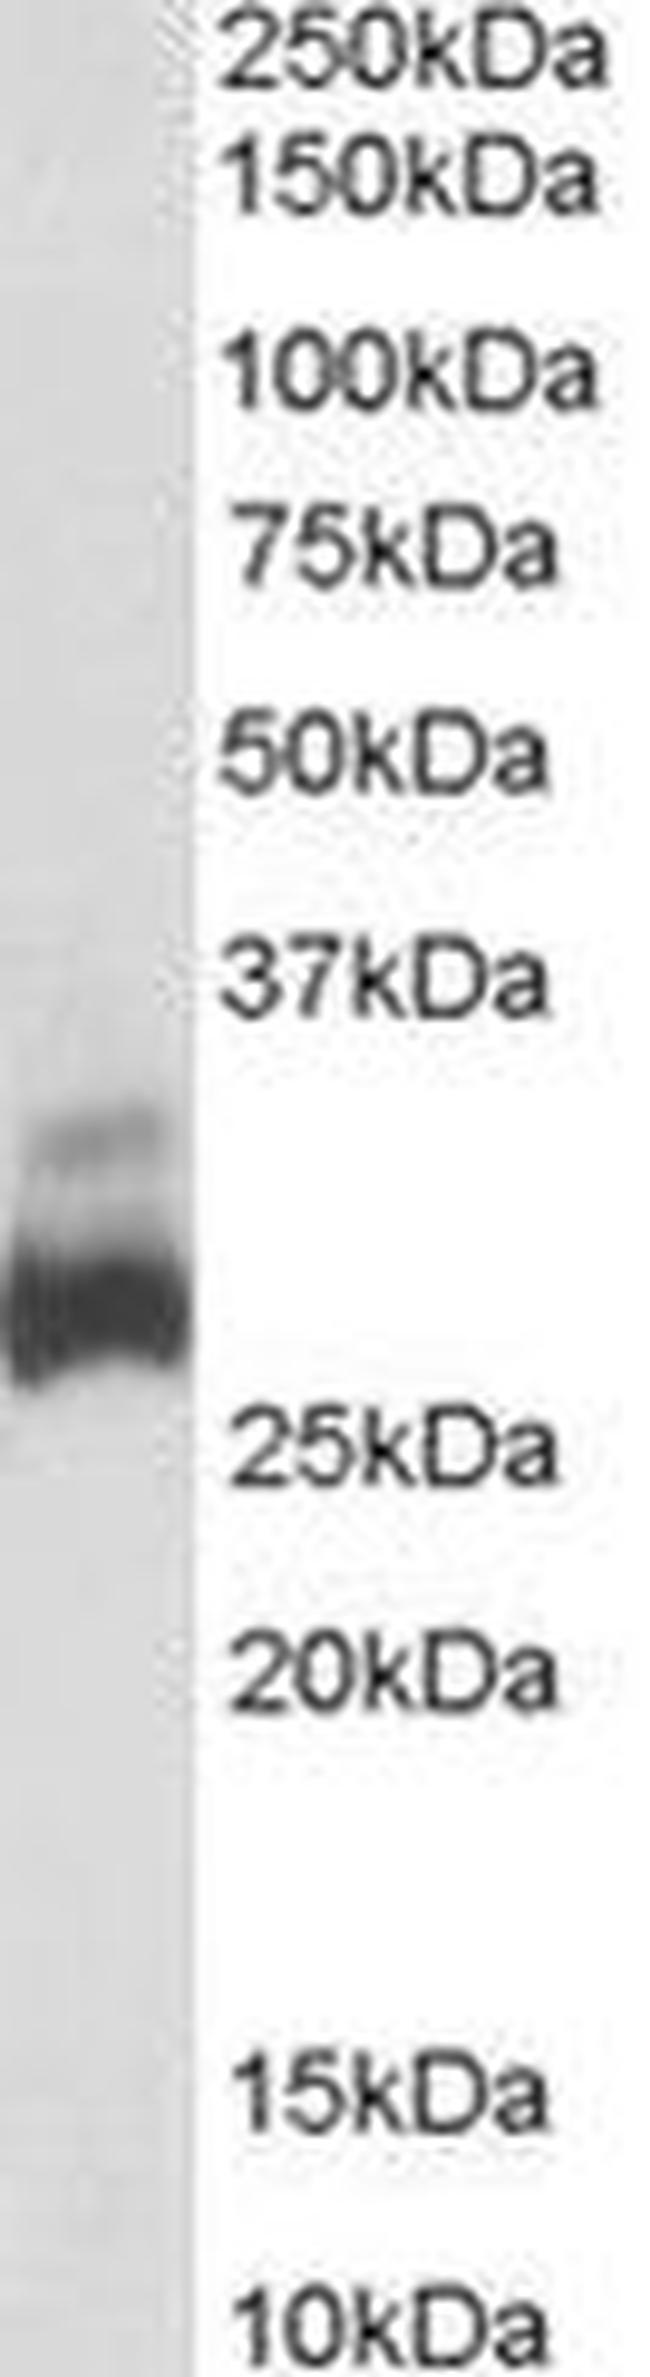 SDHB Antibody in Western Blot (WB)